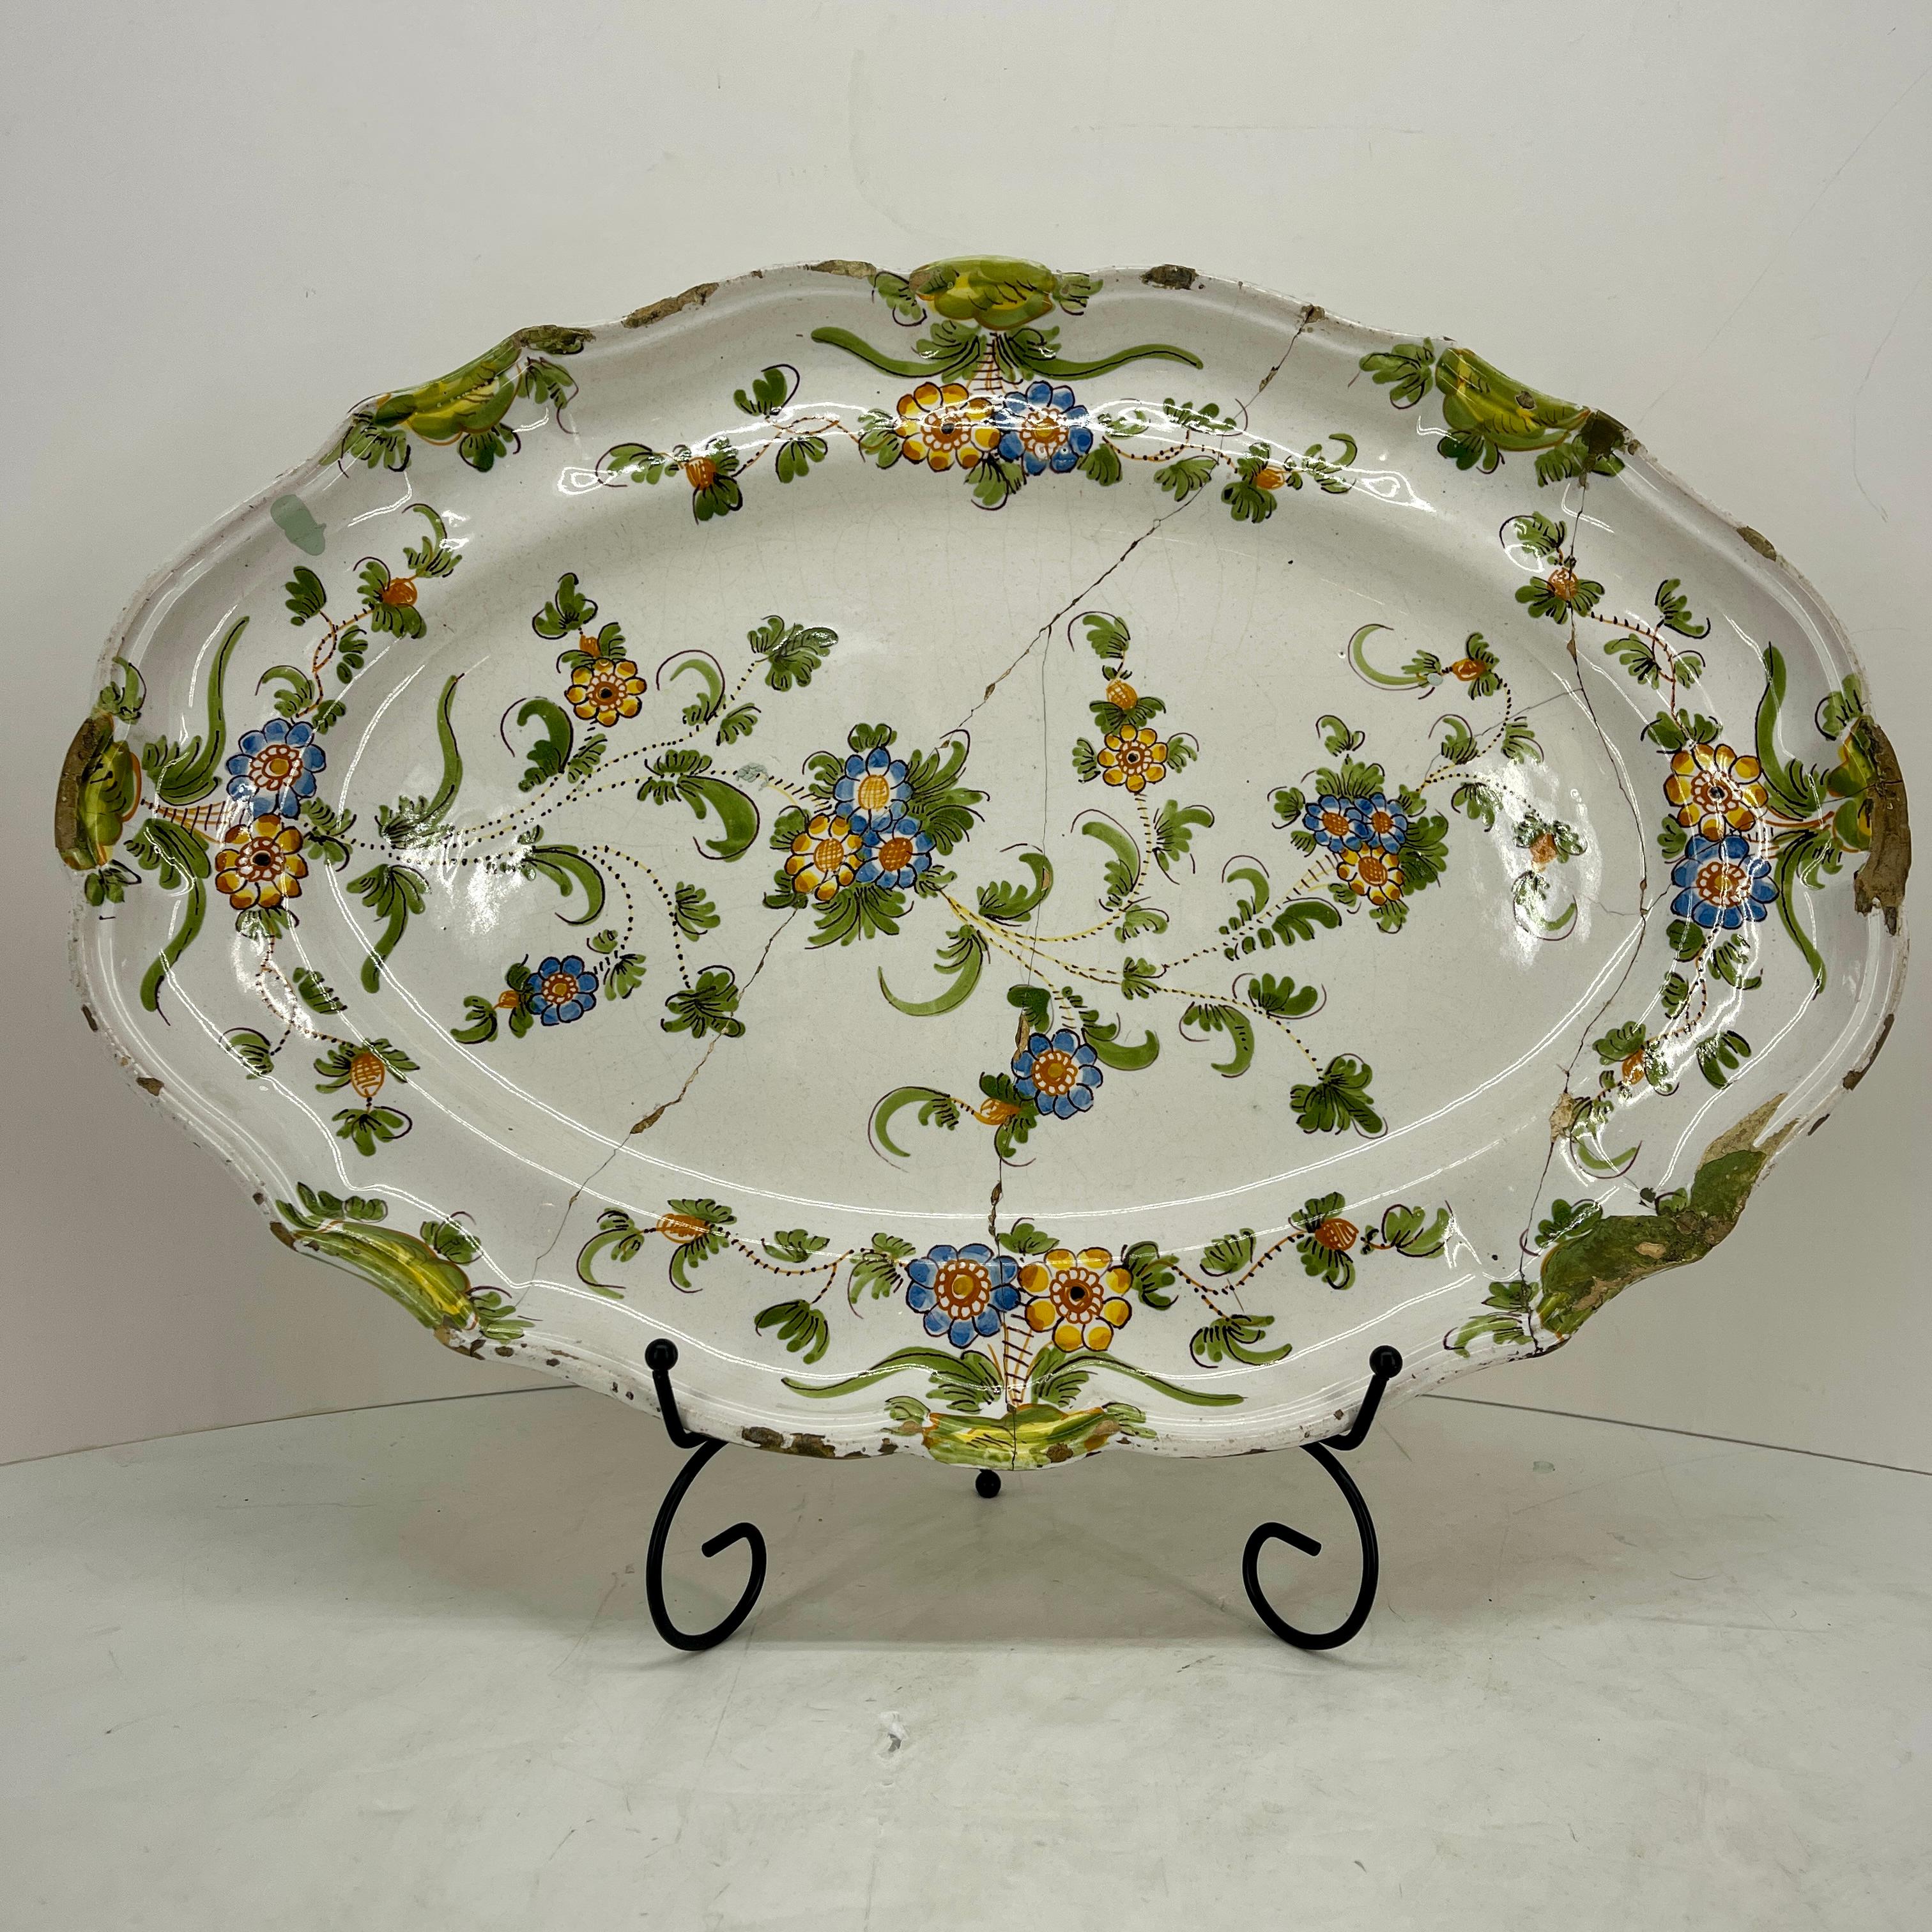 Polychromed Large 19th Century Italian Majolica Cantagalli Platter For Sale